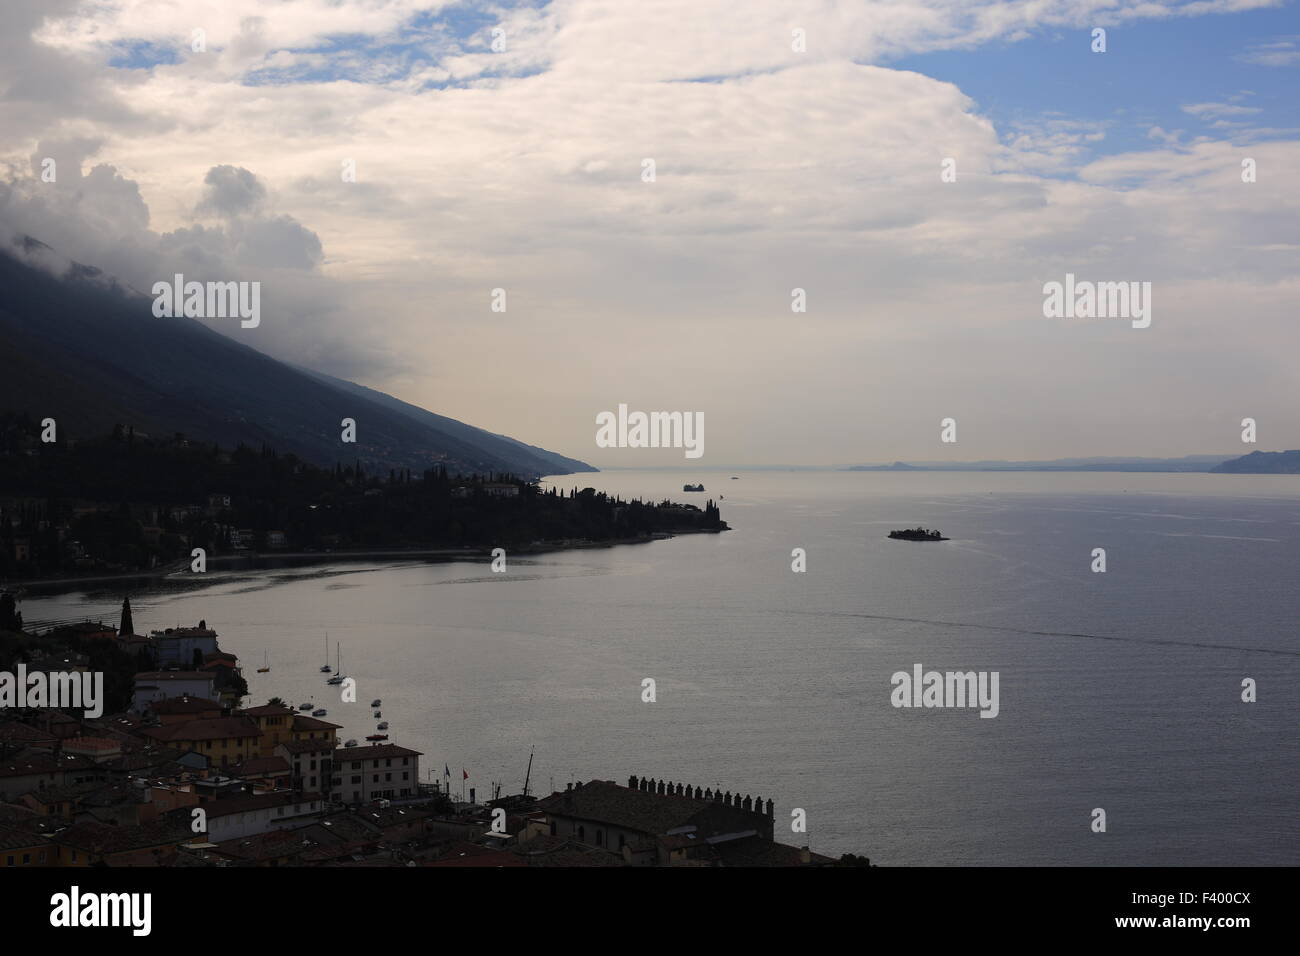 Mount Baldo, Malcesine, Lake Garda, Italy Stock Photo